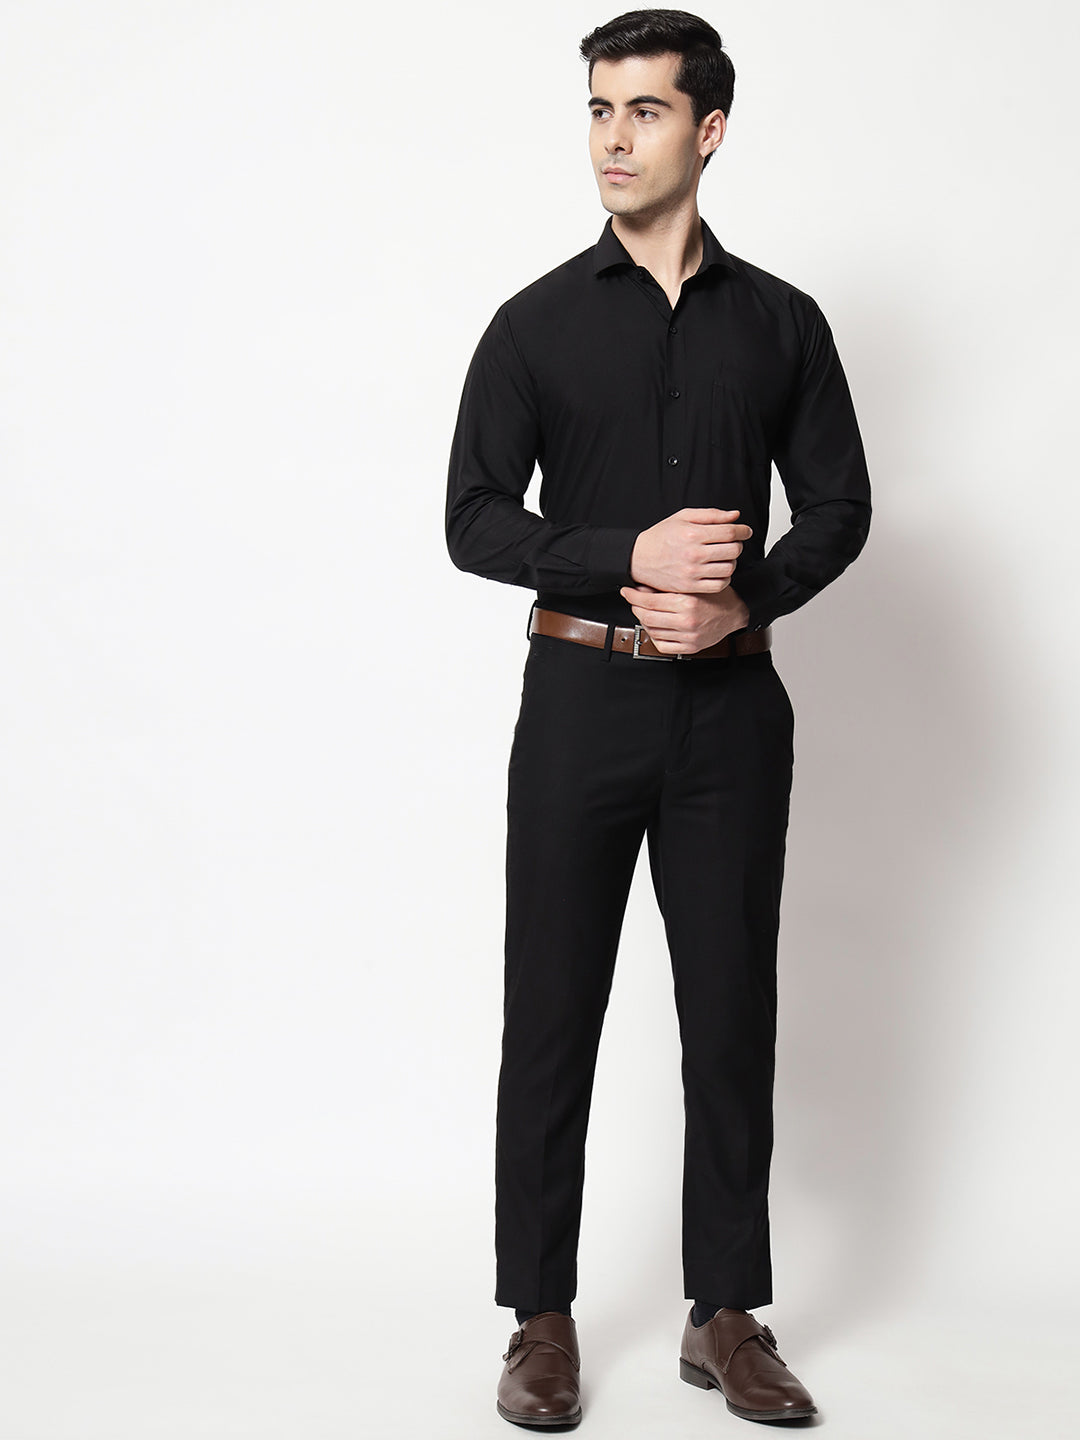 Men's Formal Shirt Black